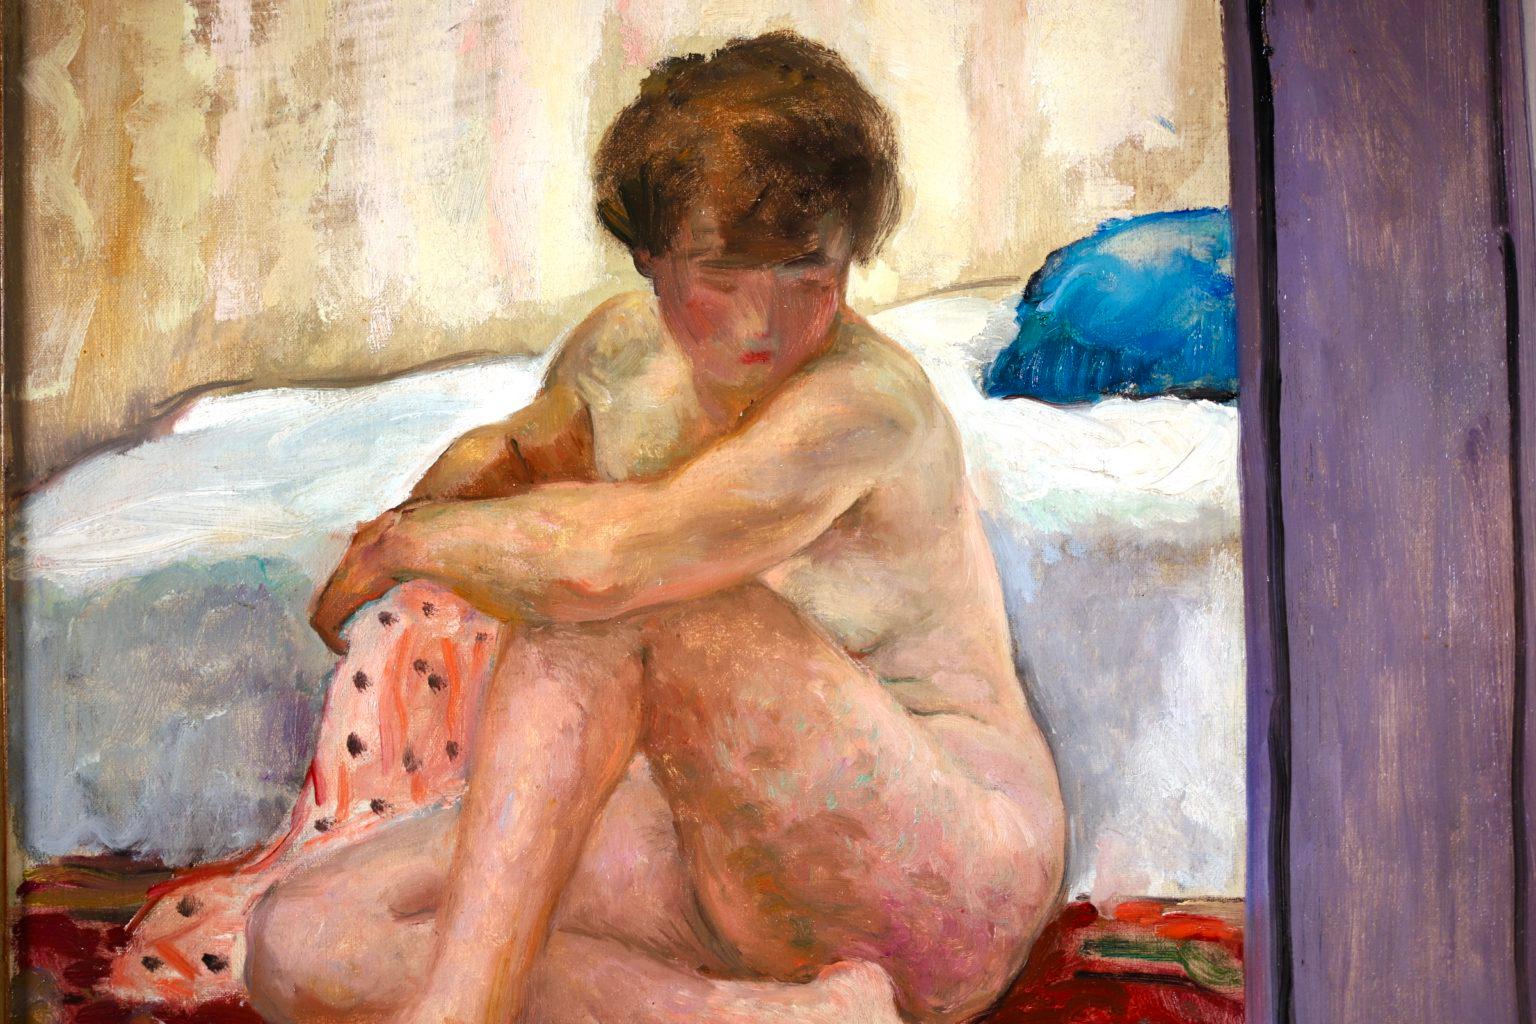 Femme Nu - Post Impressionist Oil, Nude Figure in Interior - Henri Lebasque 2